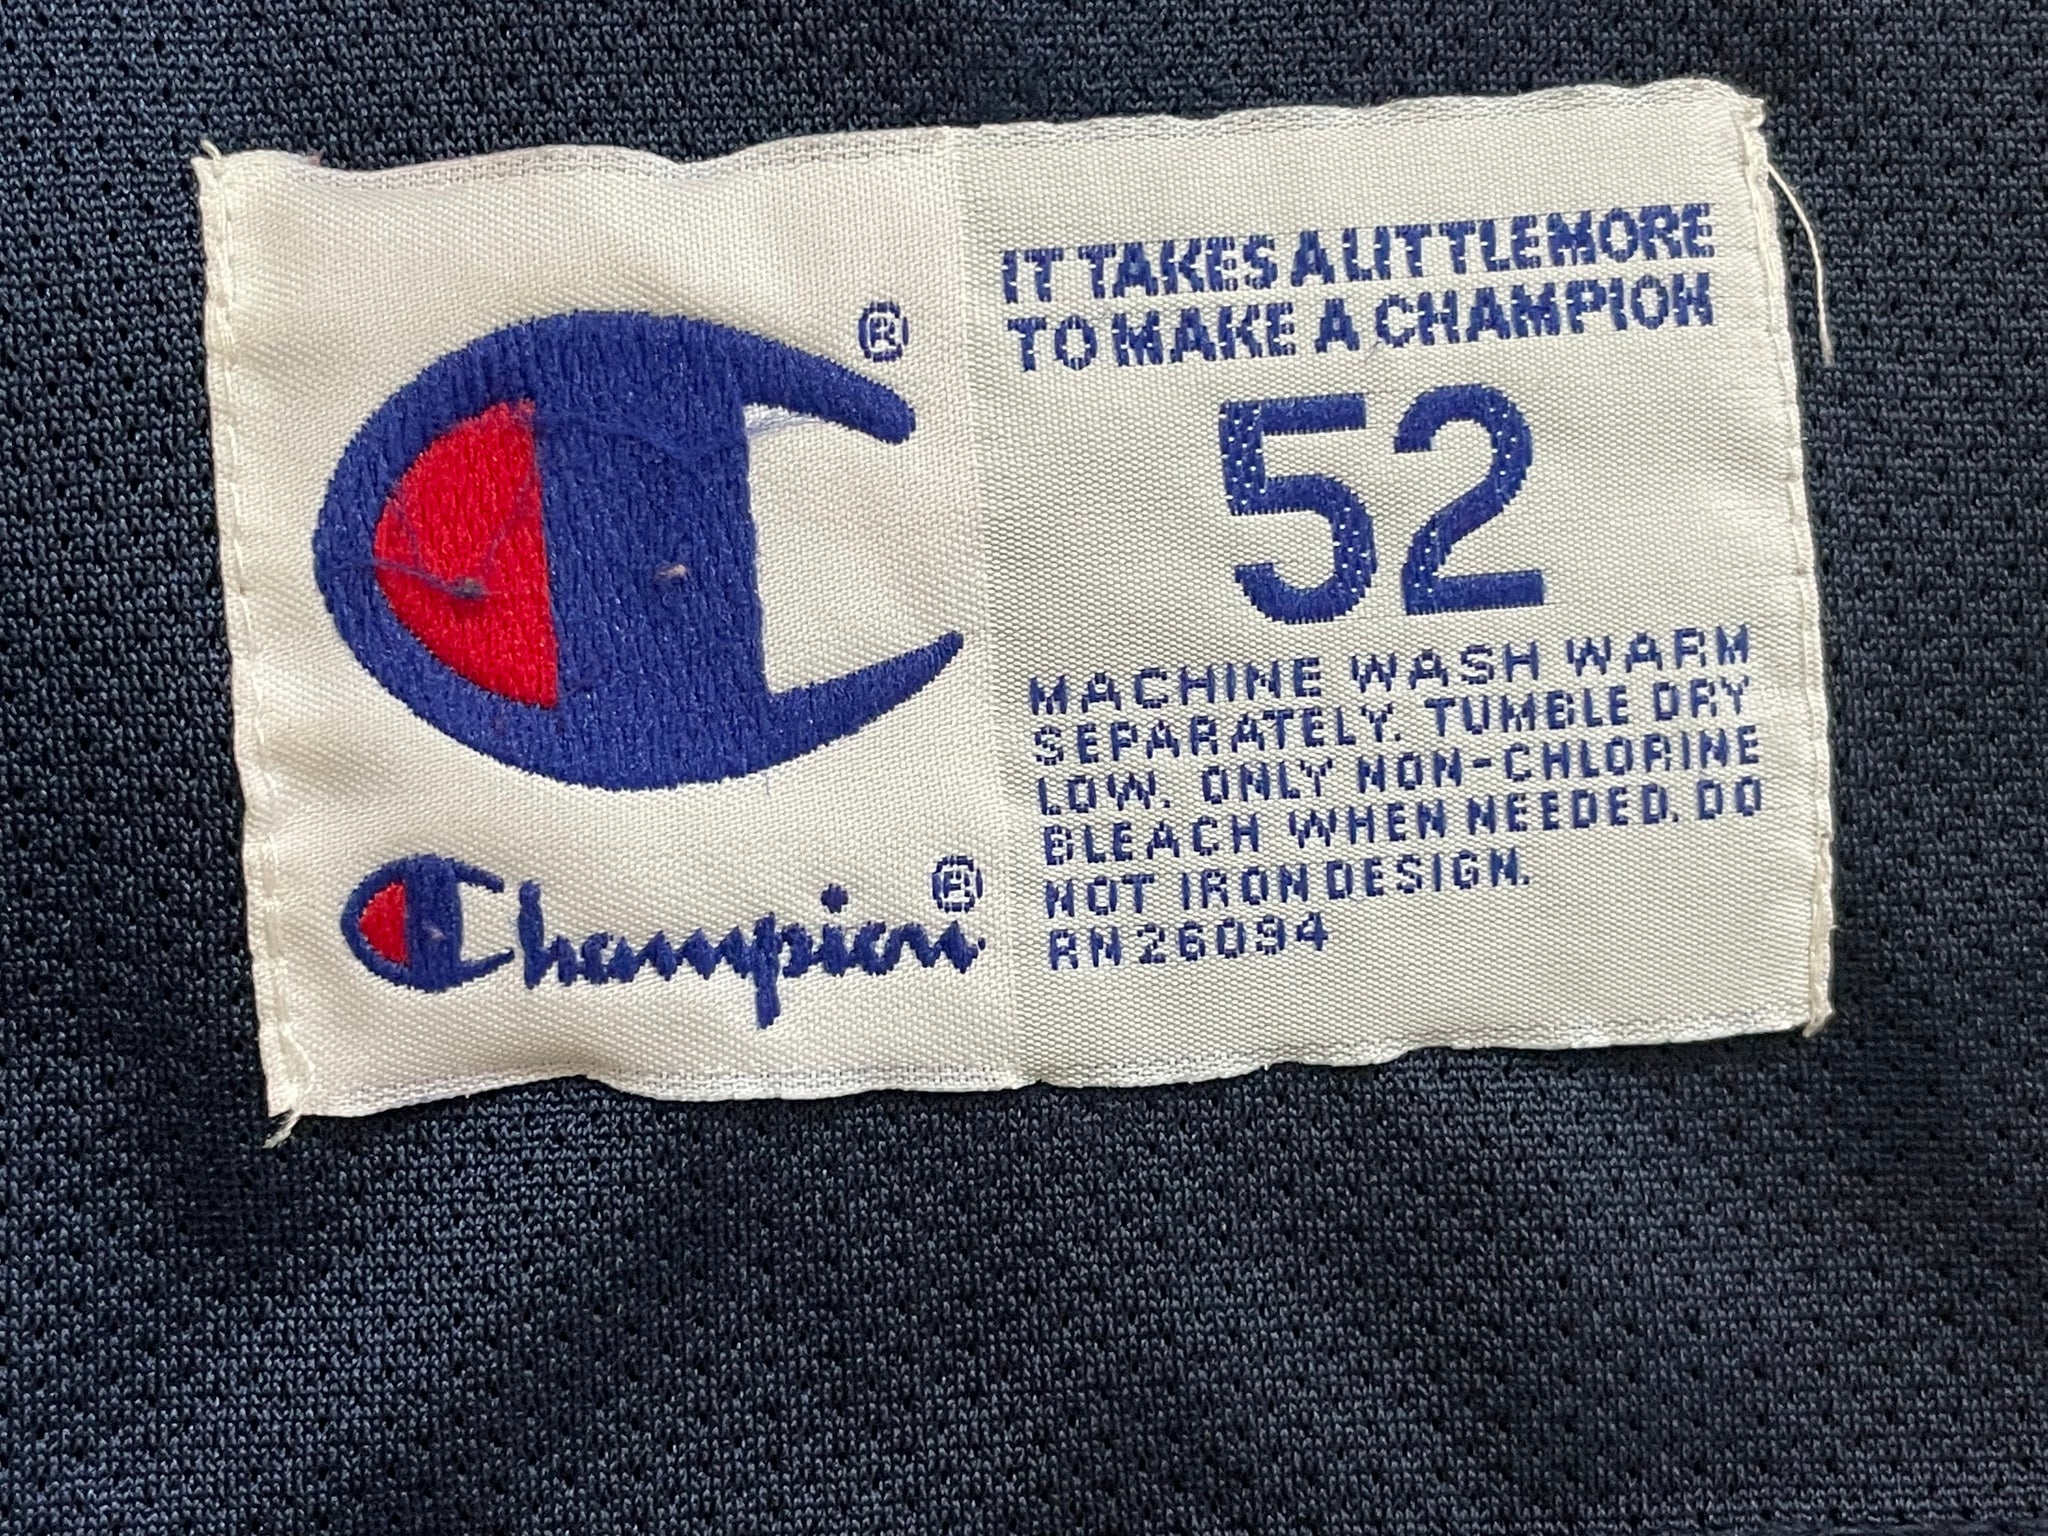 Vintage Champion Denver Nuggets Raef LaFrentz Jersey Size 48